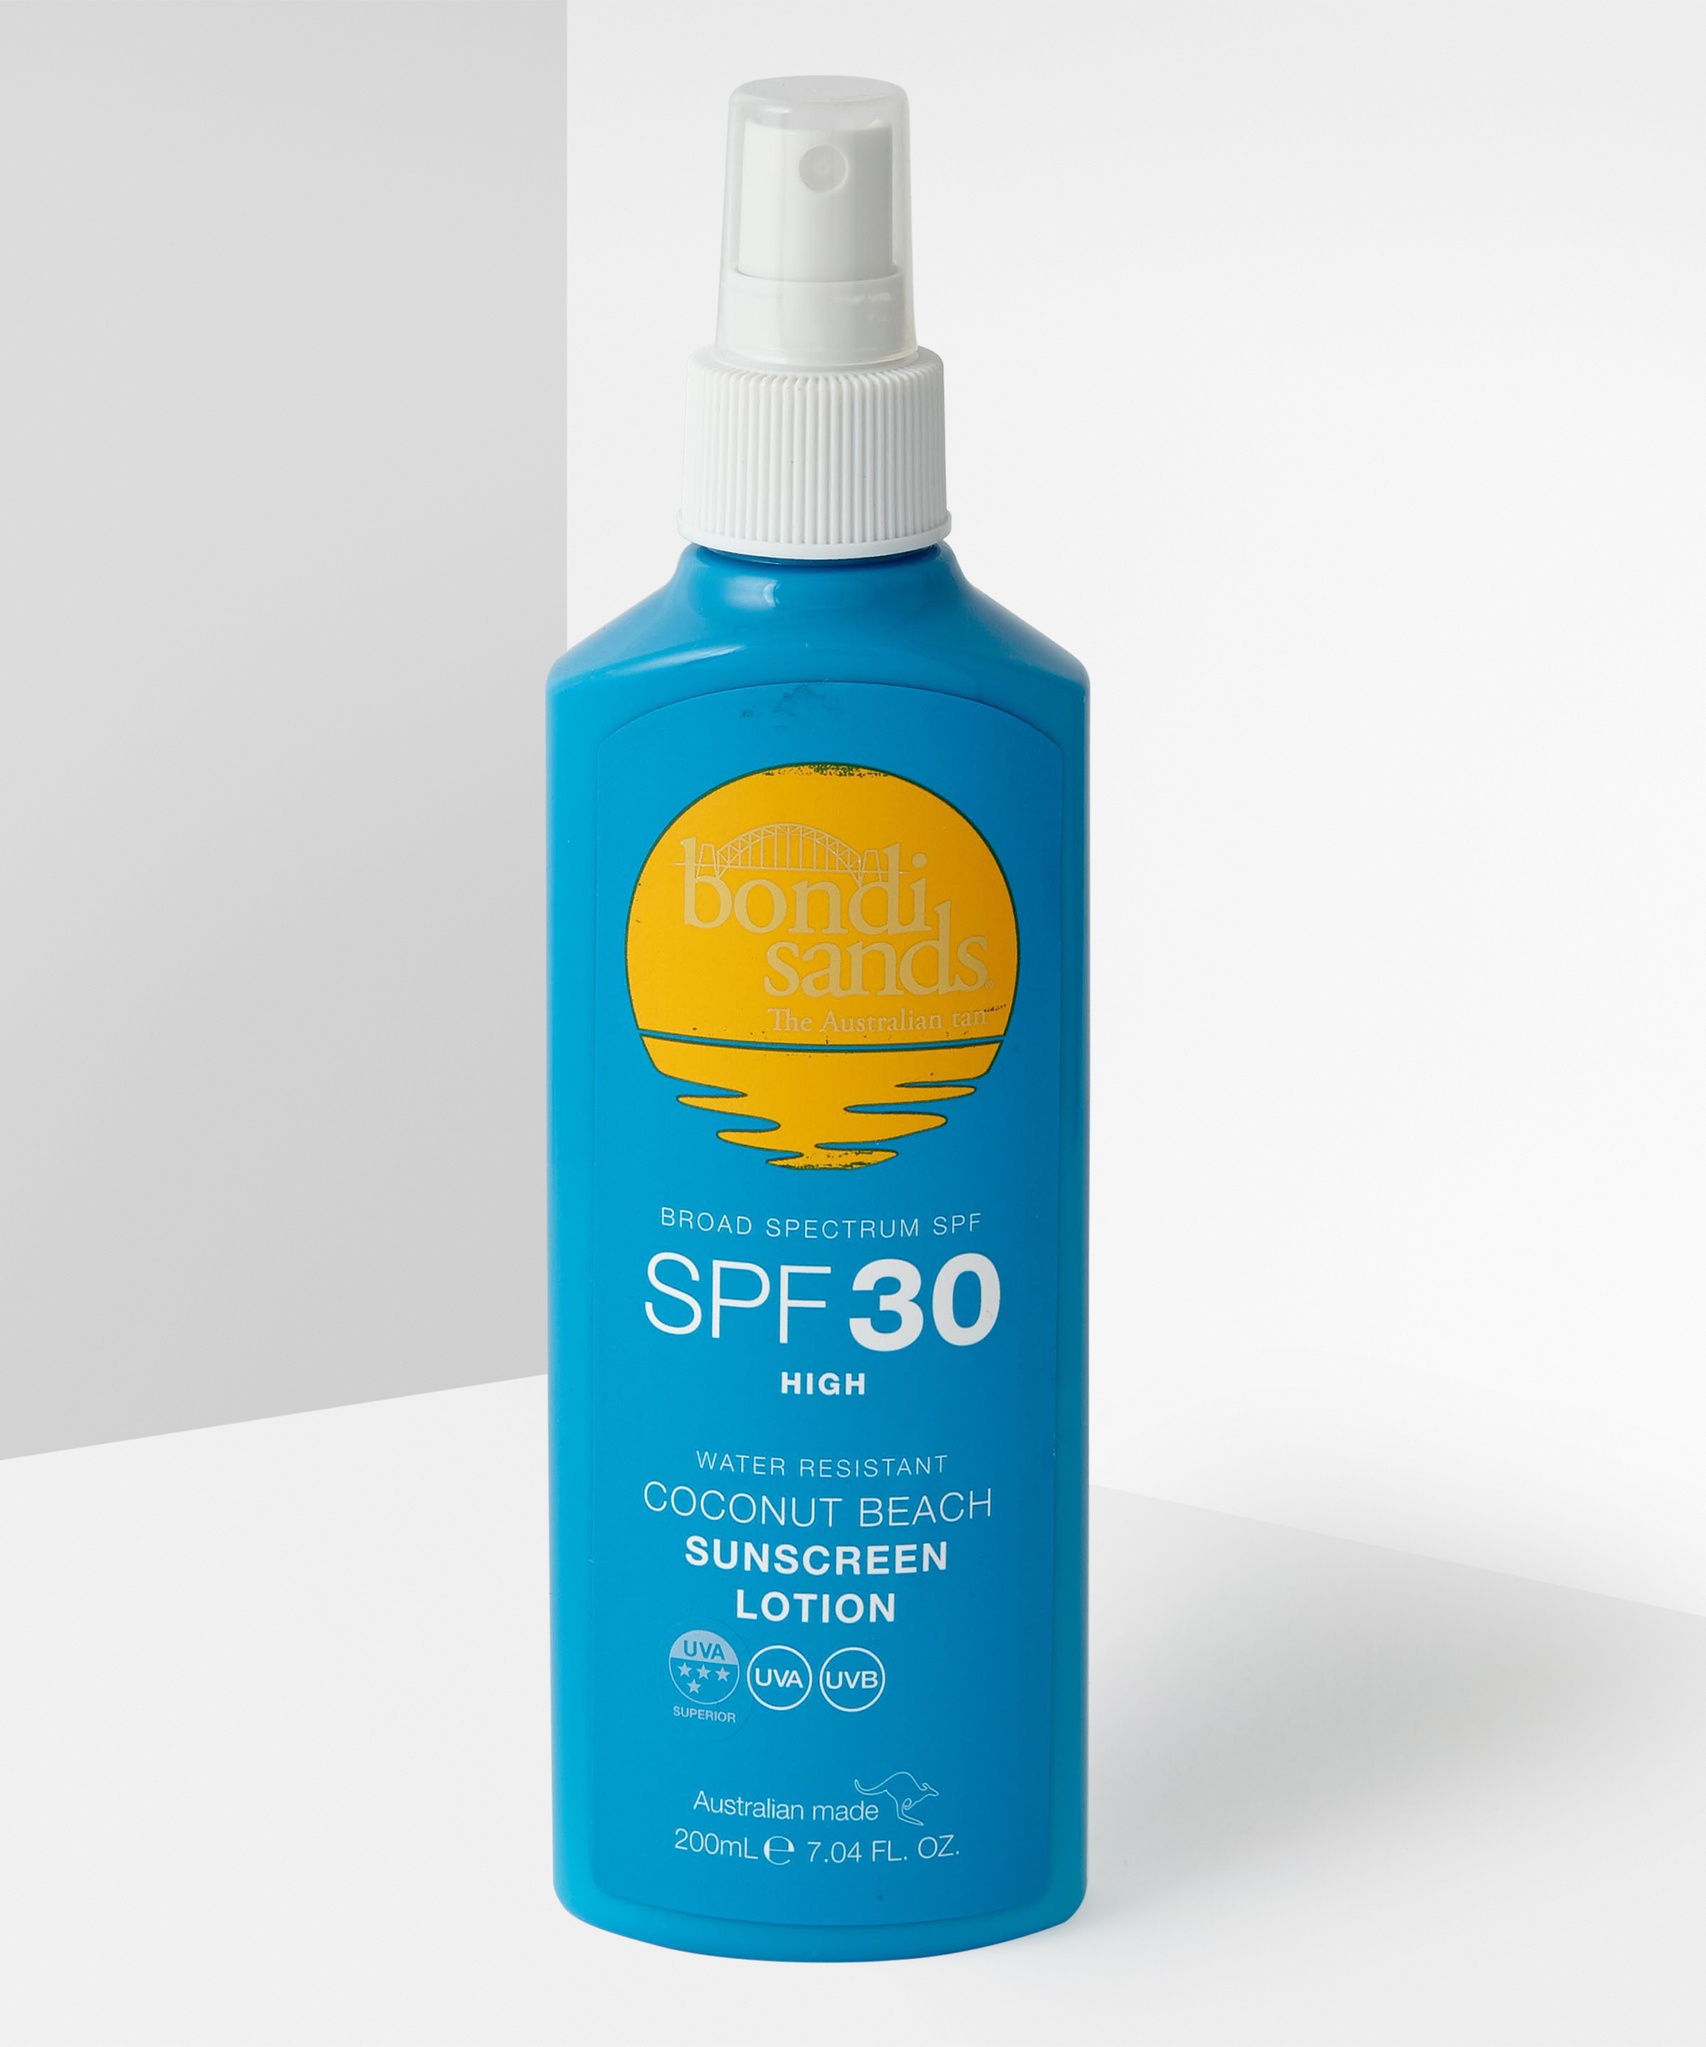 Bondi Sands Sunscreen Lotion SPF 30